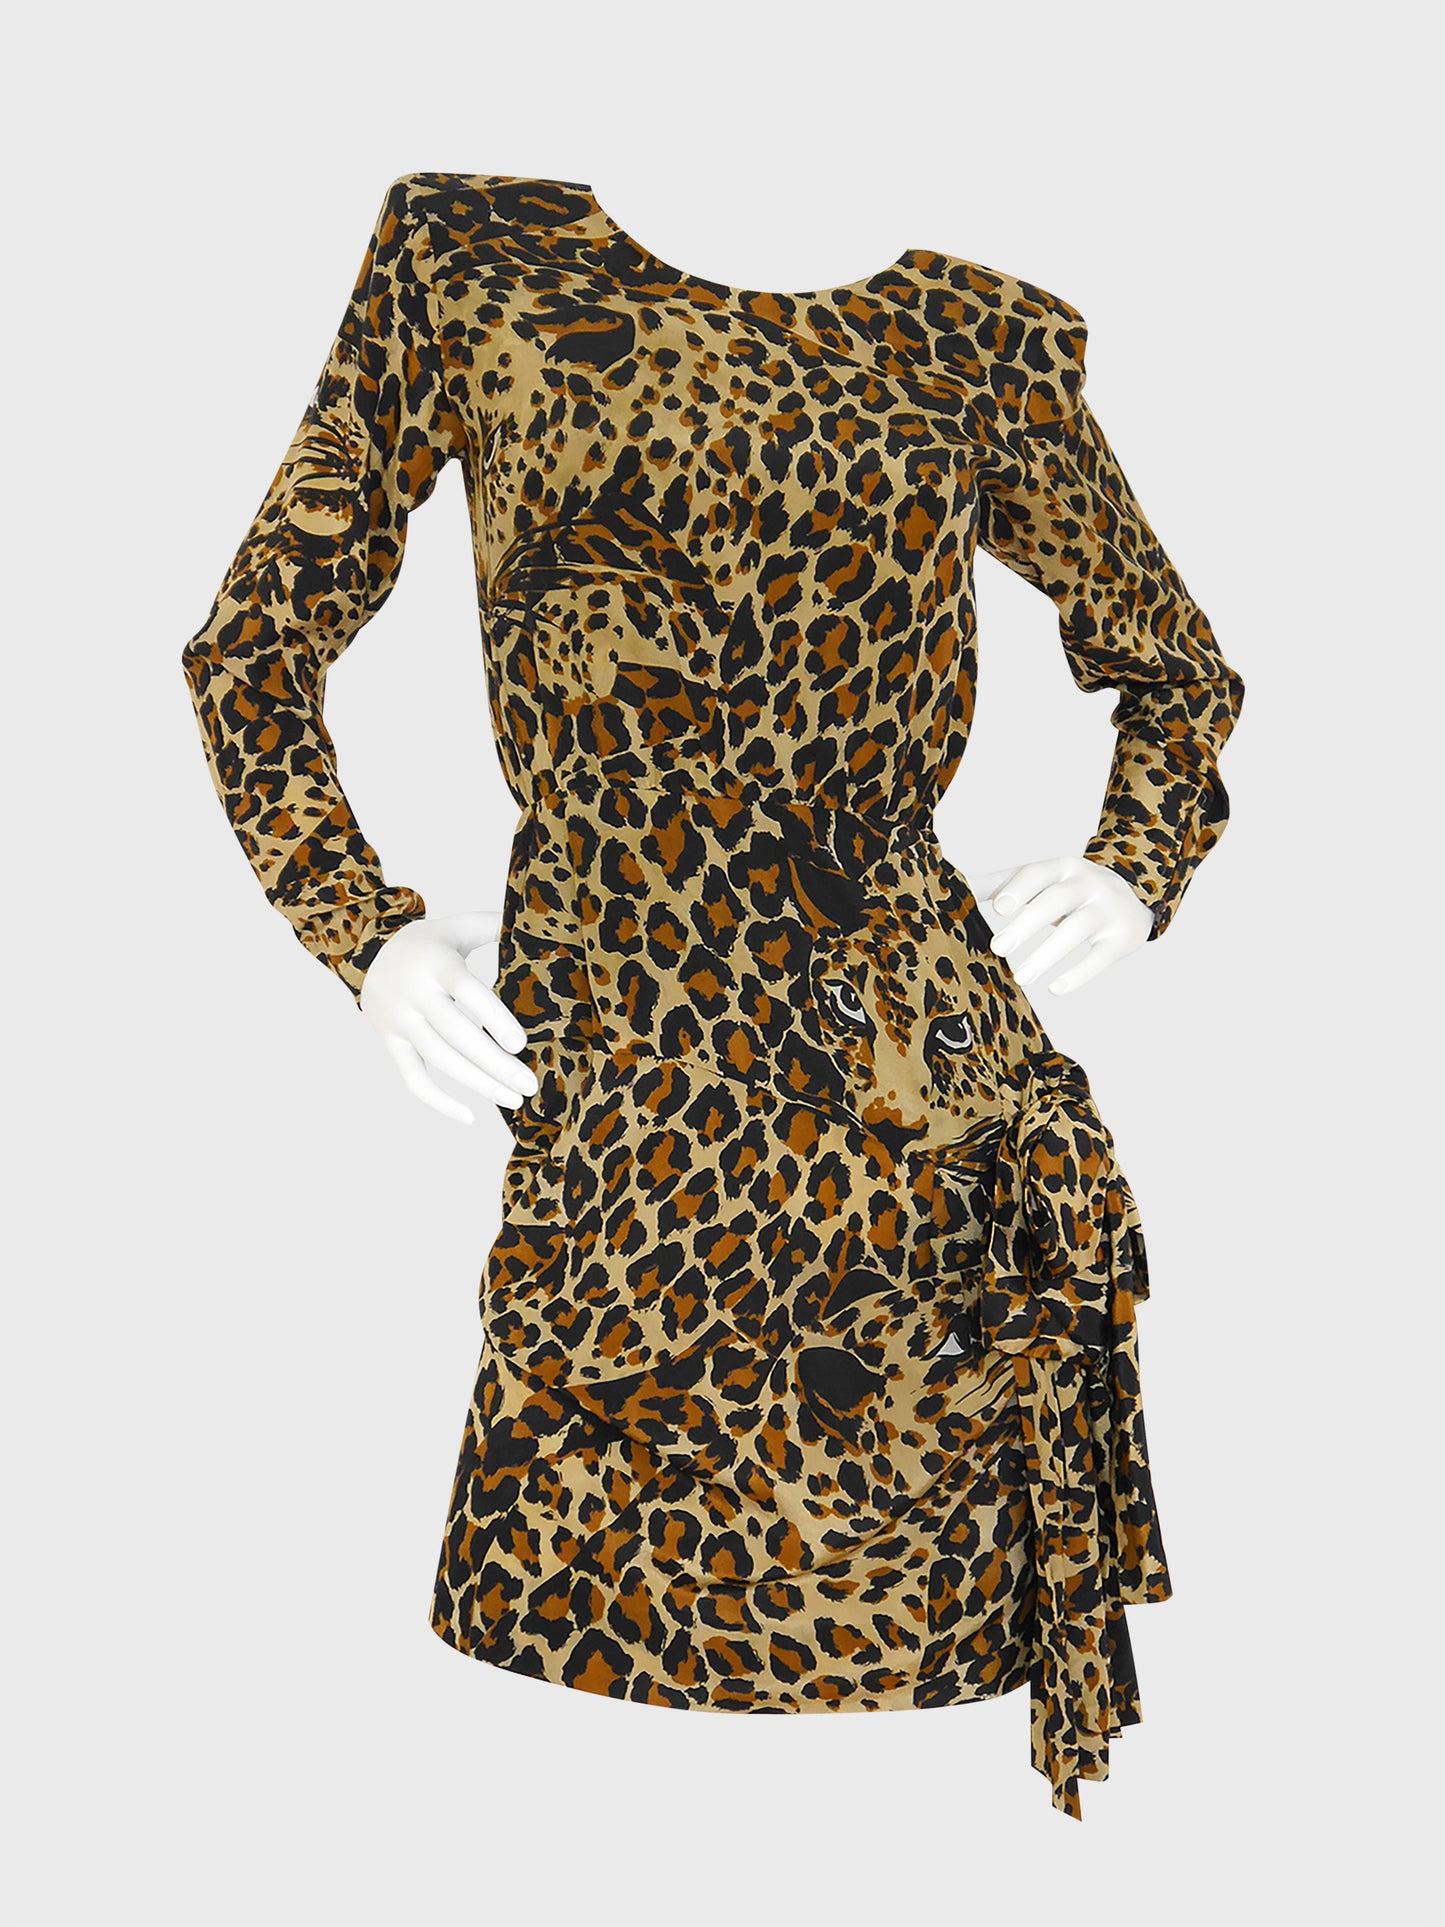 YVES SAINT LAURENT 1986 Vintage Leopard Print Silk Dress